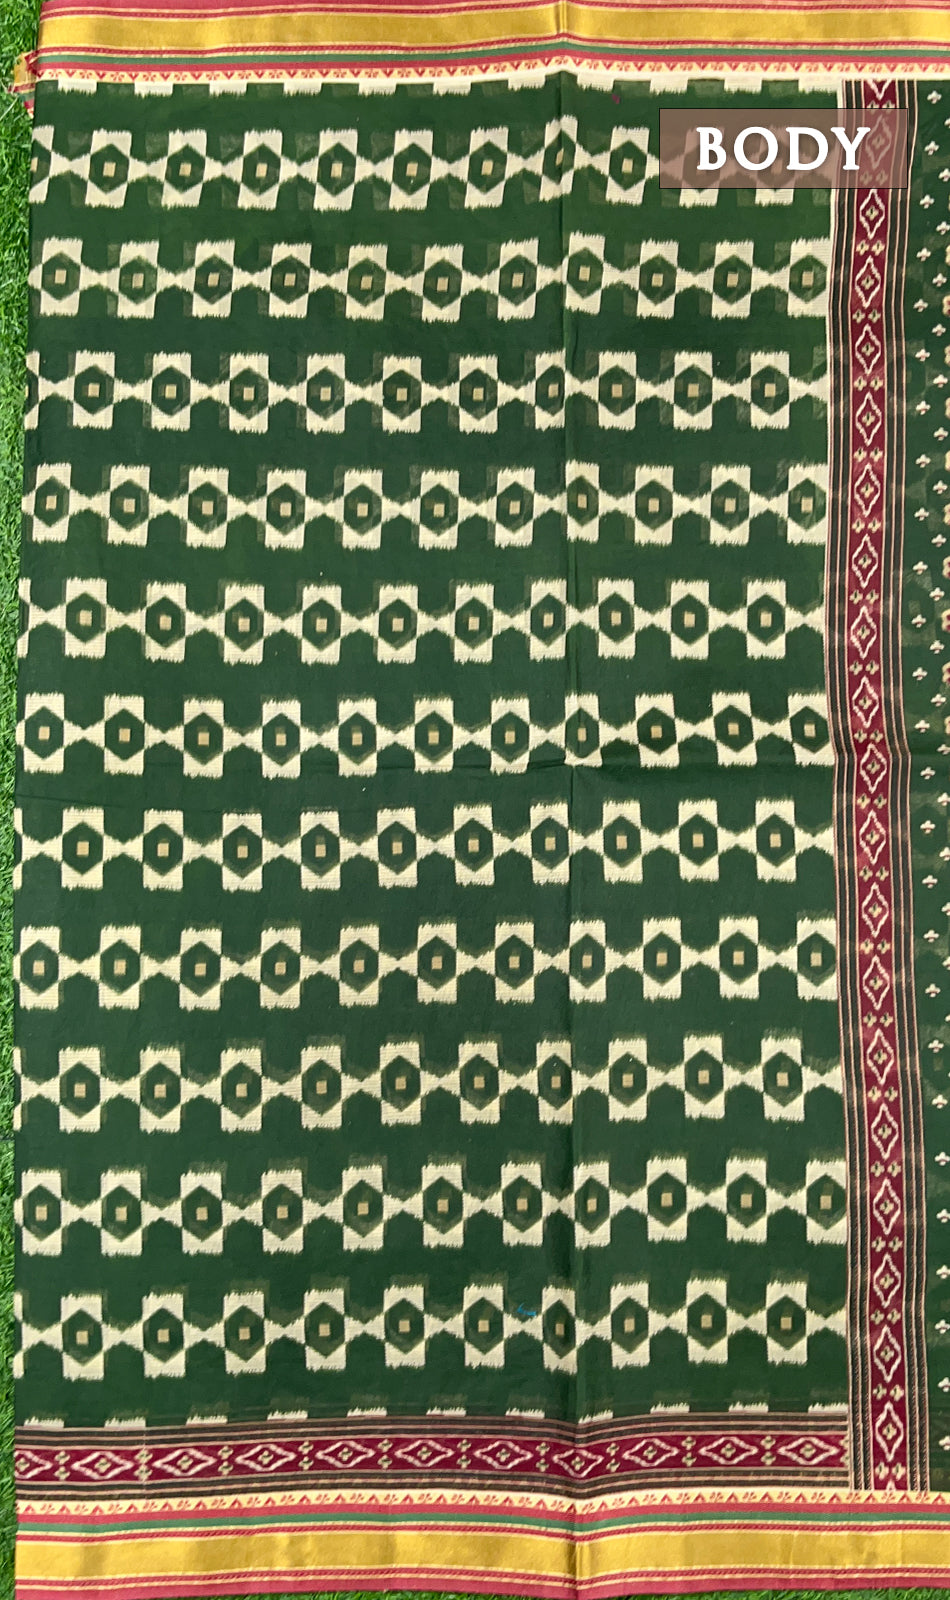 Dark green and maroon printed cotton saree